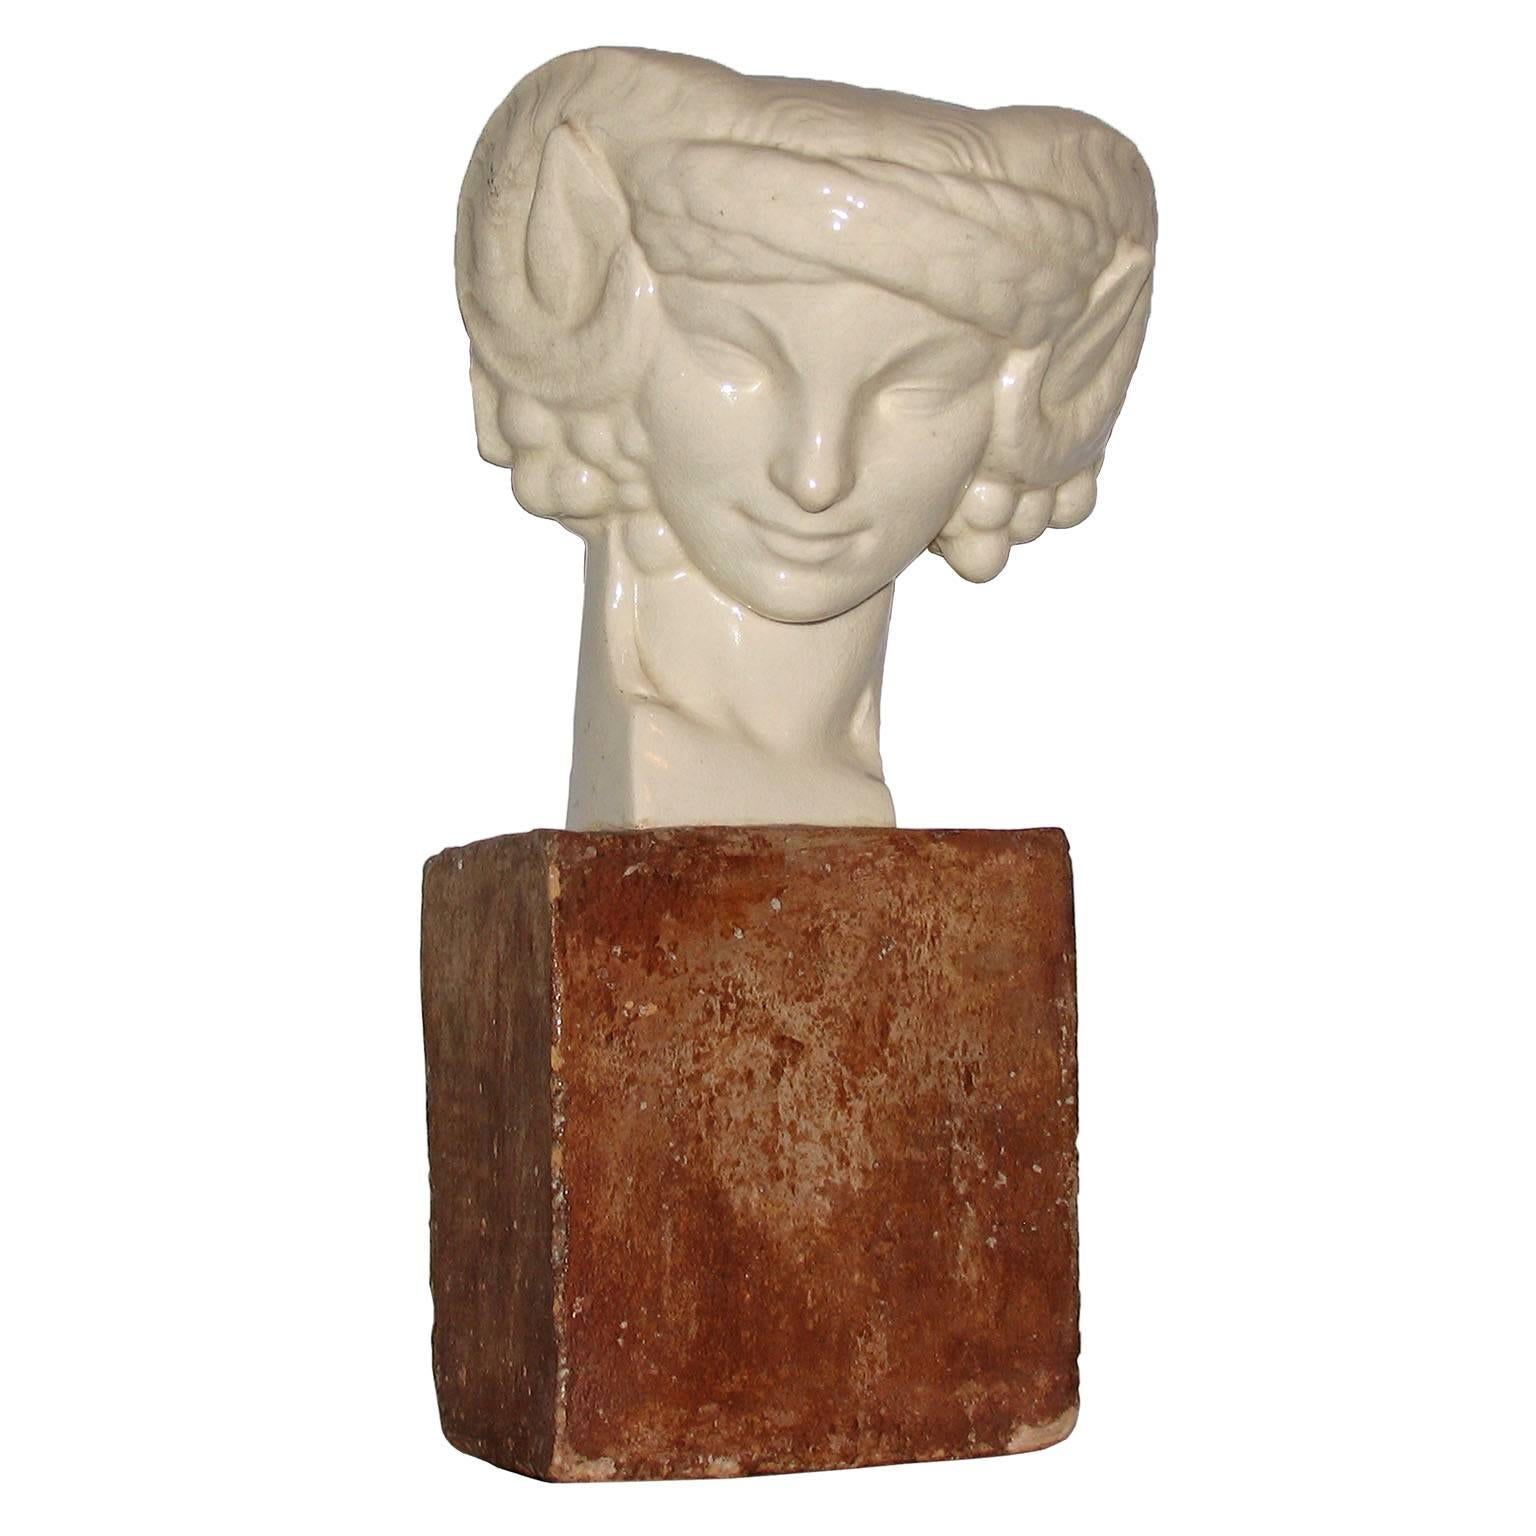 Faun Head Ceramic Sculpture by Foucault